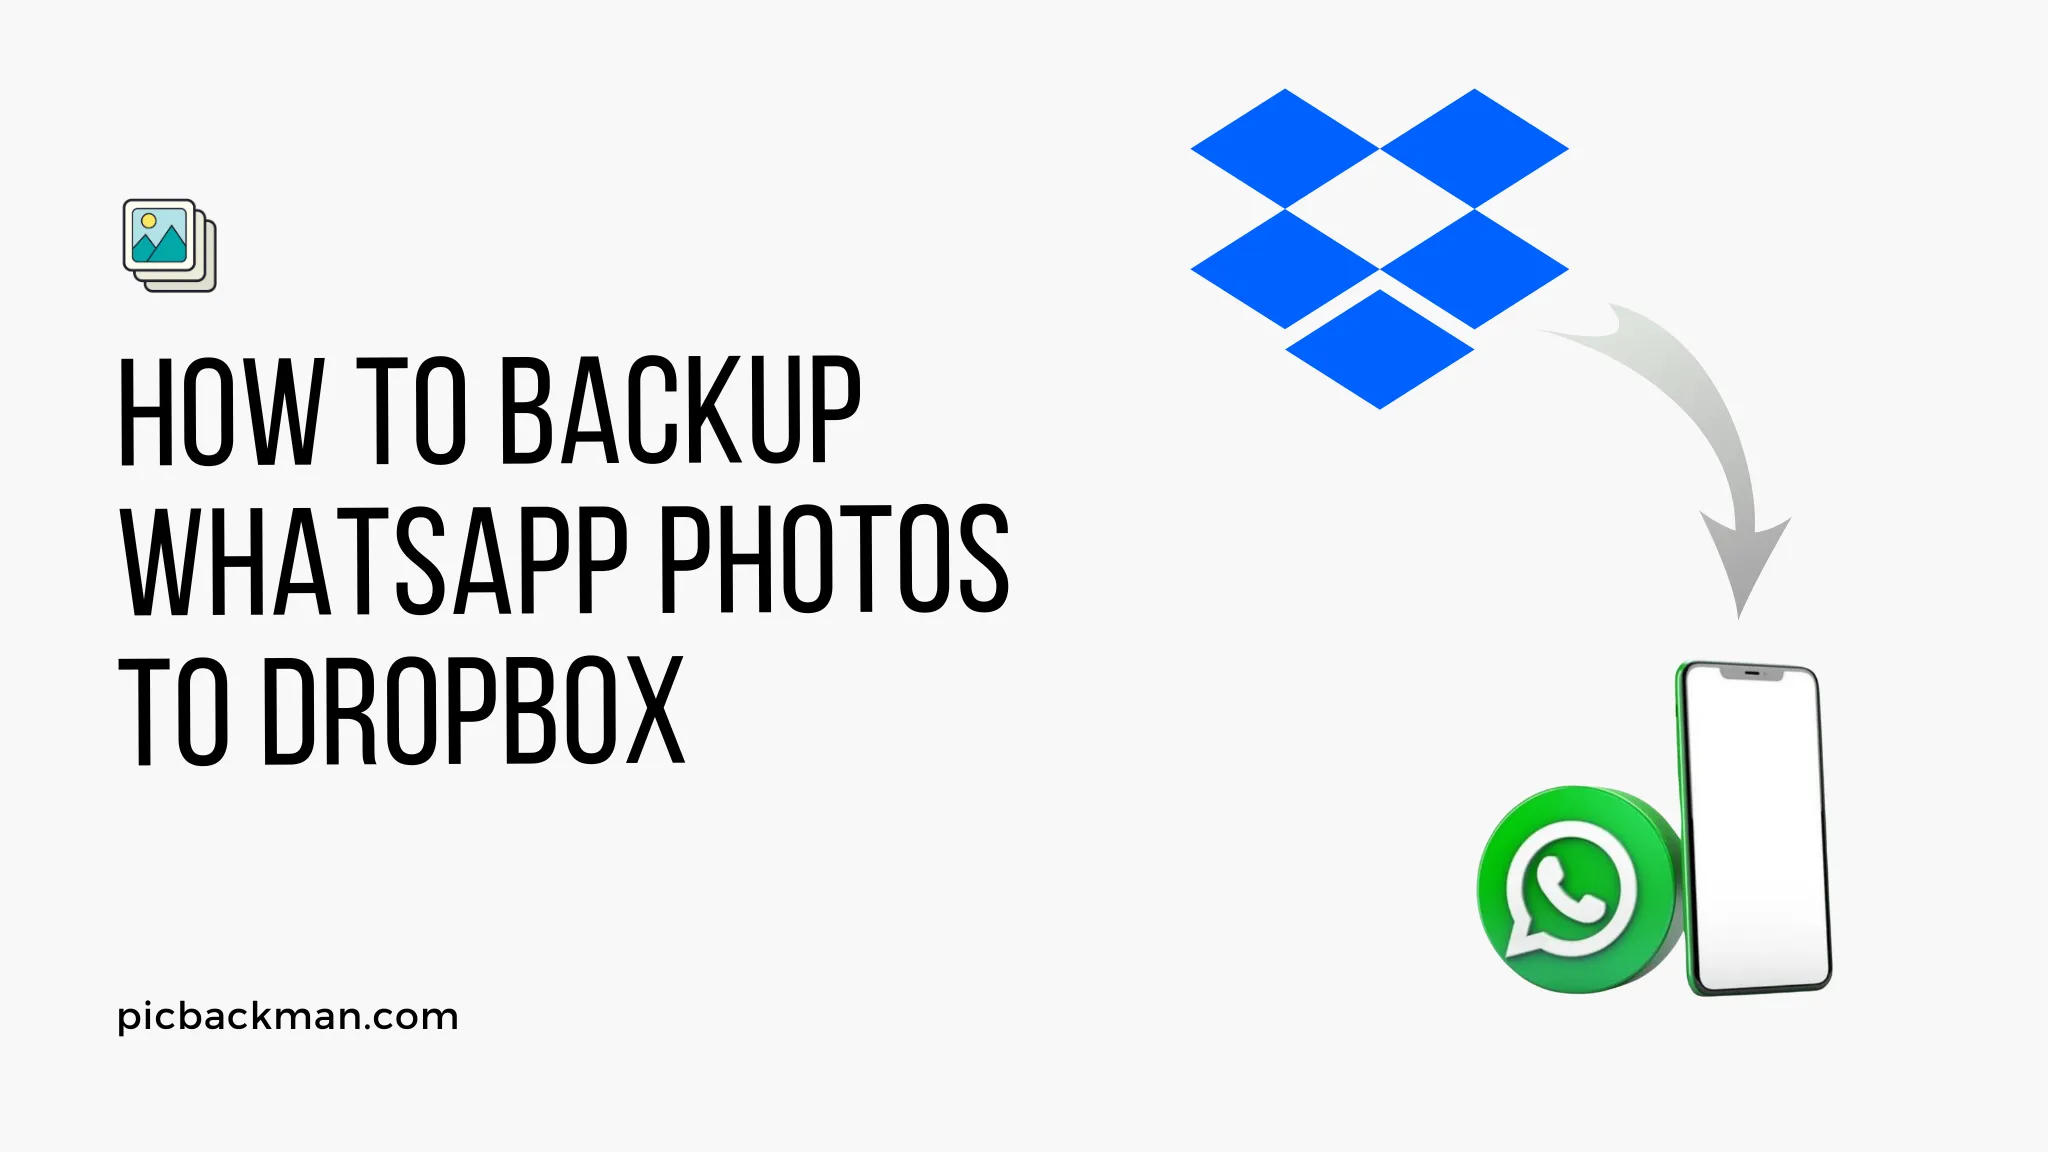 How to Backup WhatsApp Photos to Dropbox